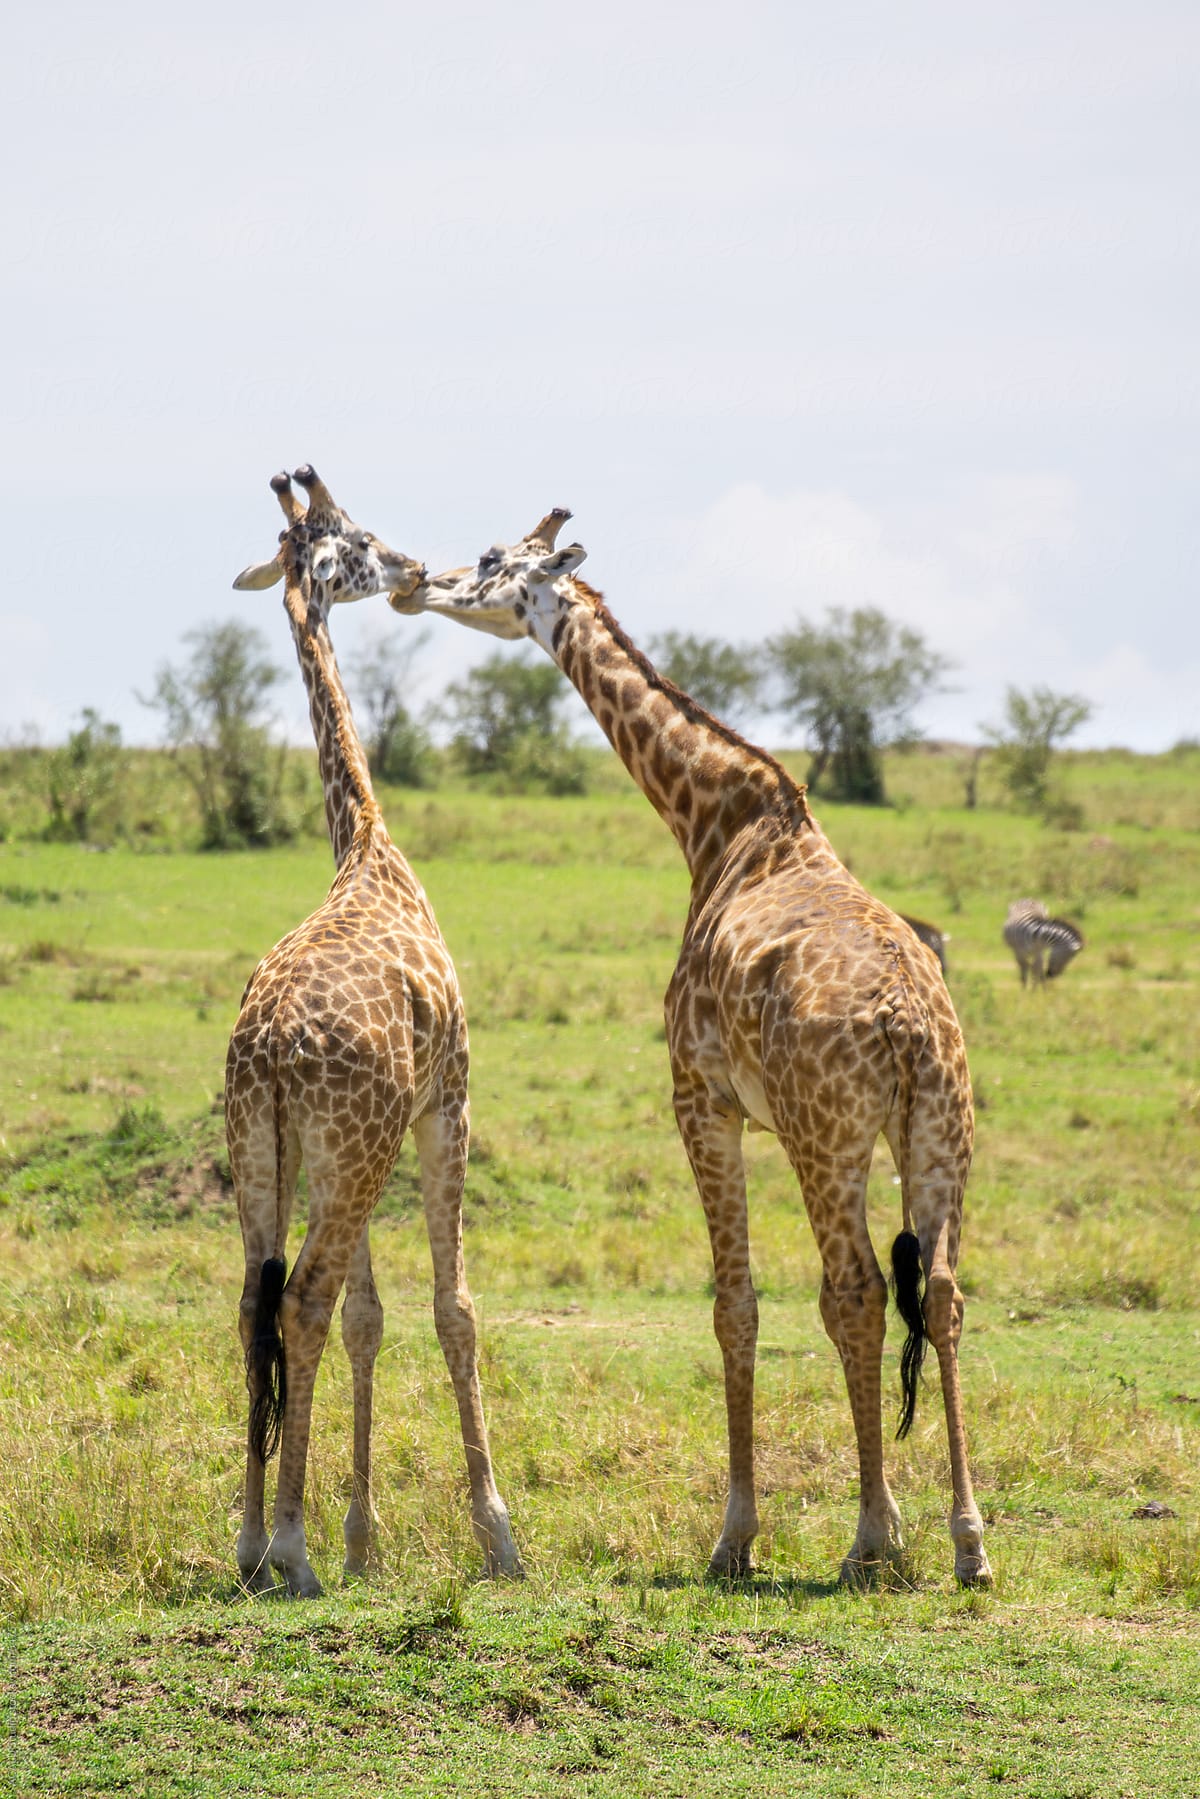 Couple of giraffes giving a kiss